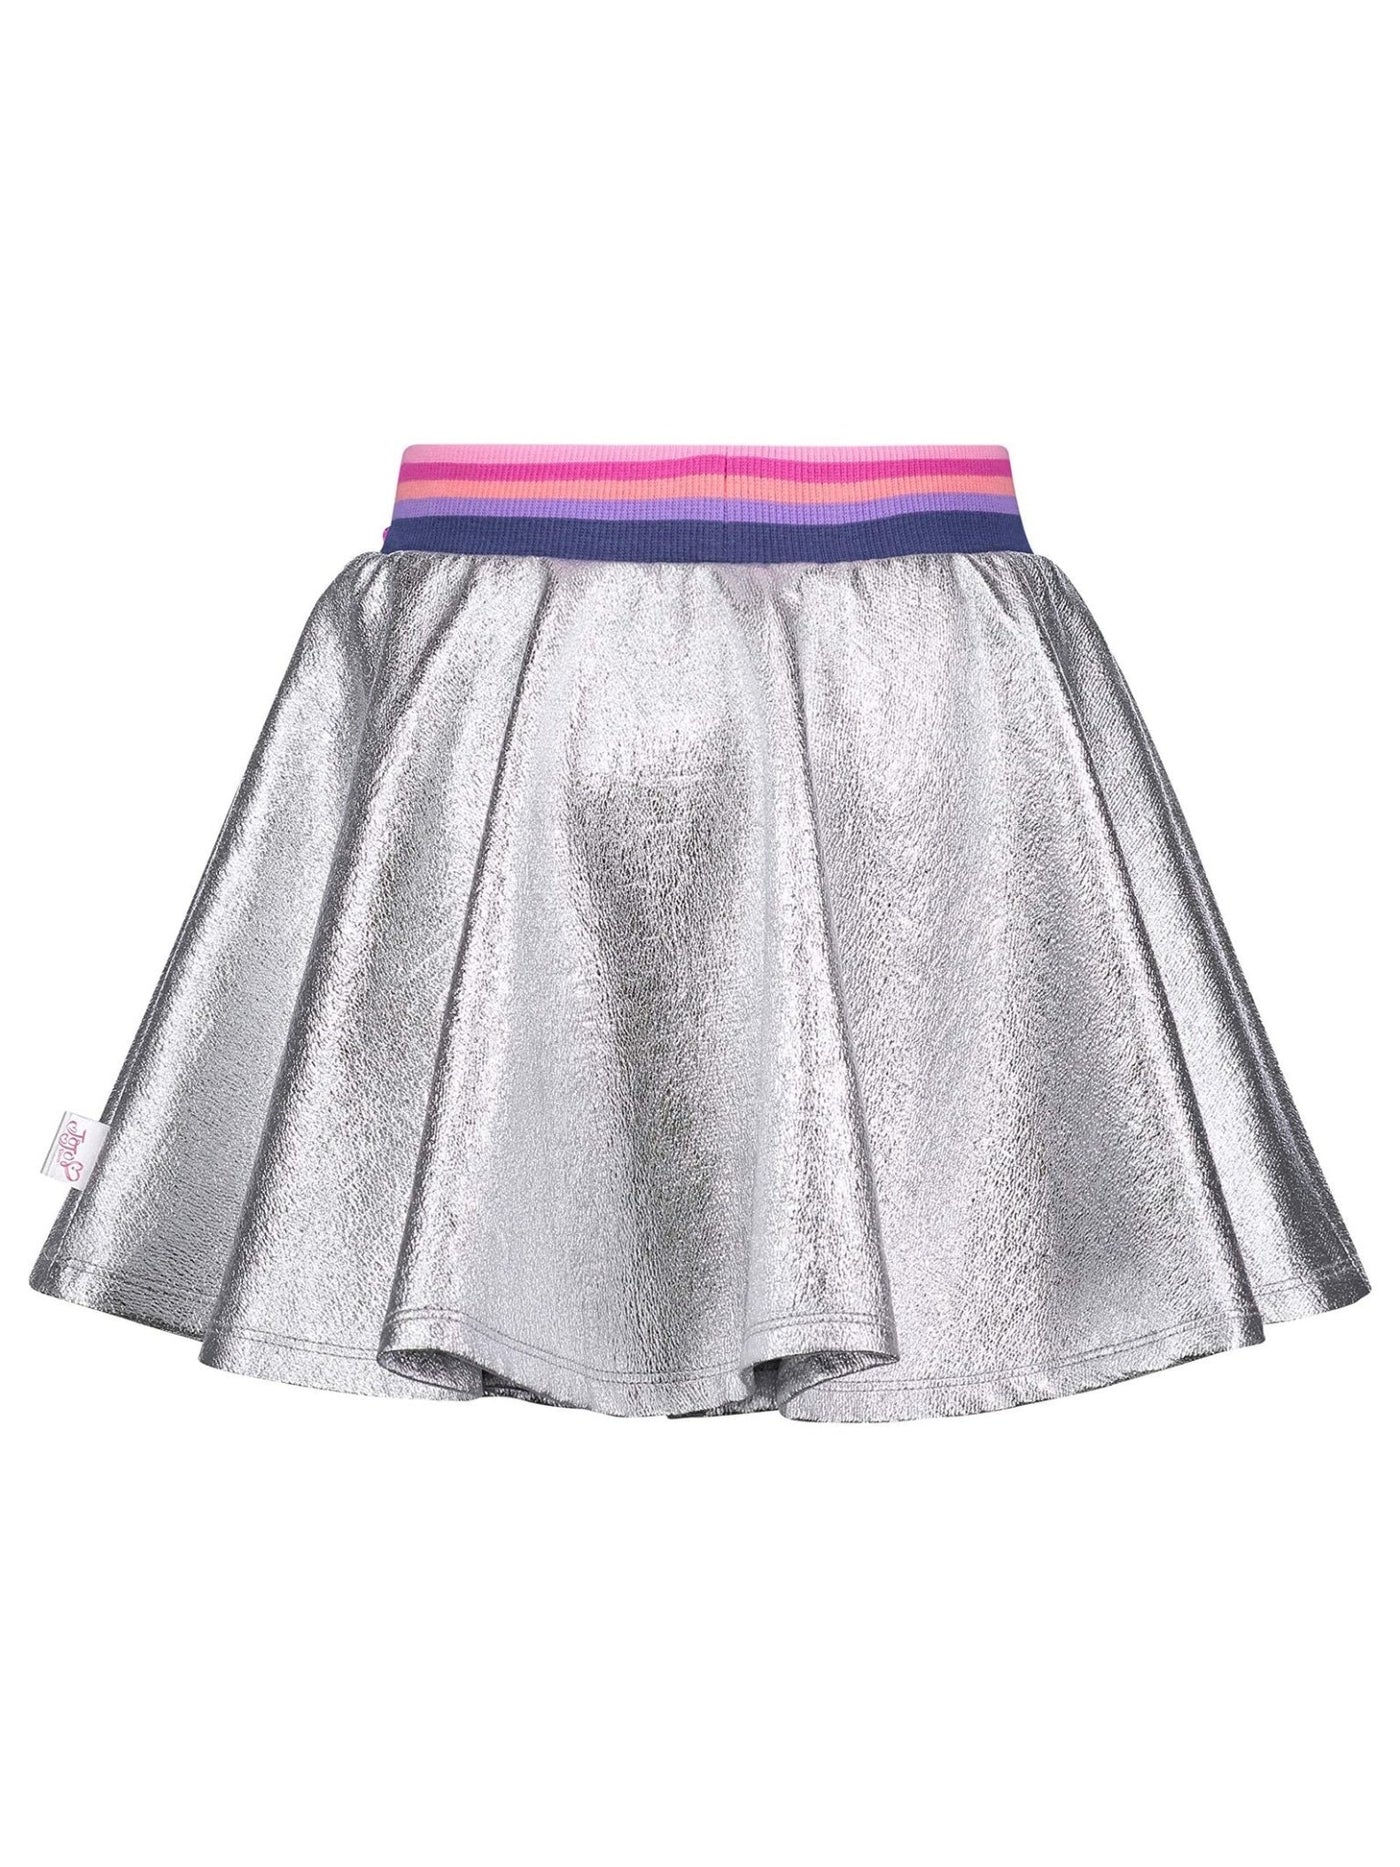 JoJo Siwa French Terry Pleated Skirt - imagikids